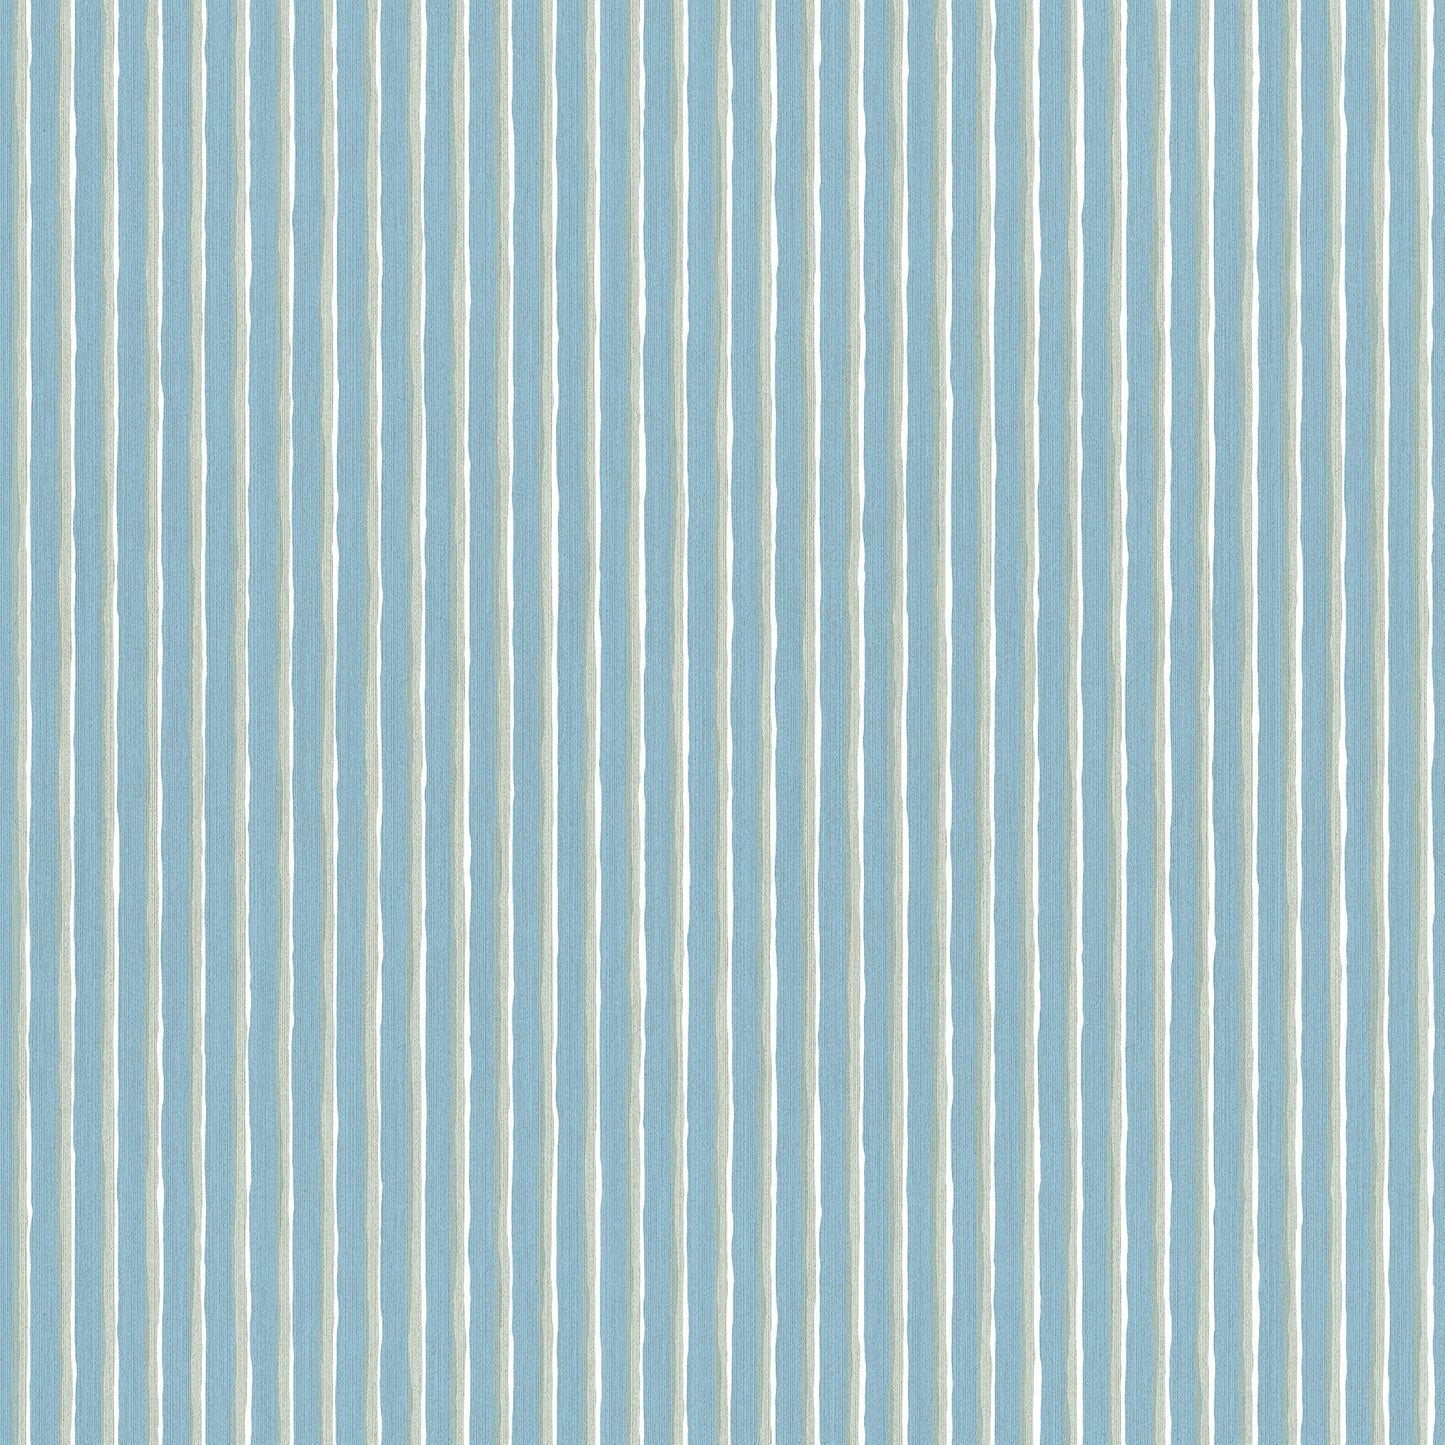 S10143 Brita sky blue, Huset i Solen by Sandberg Wallpaper